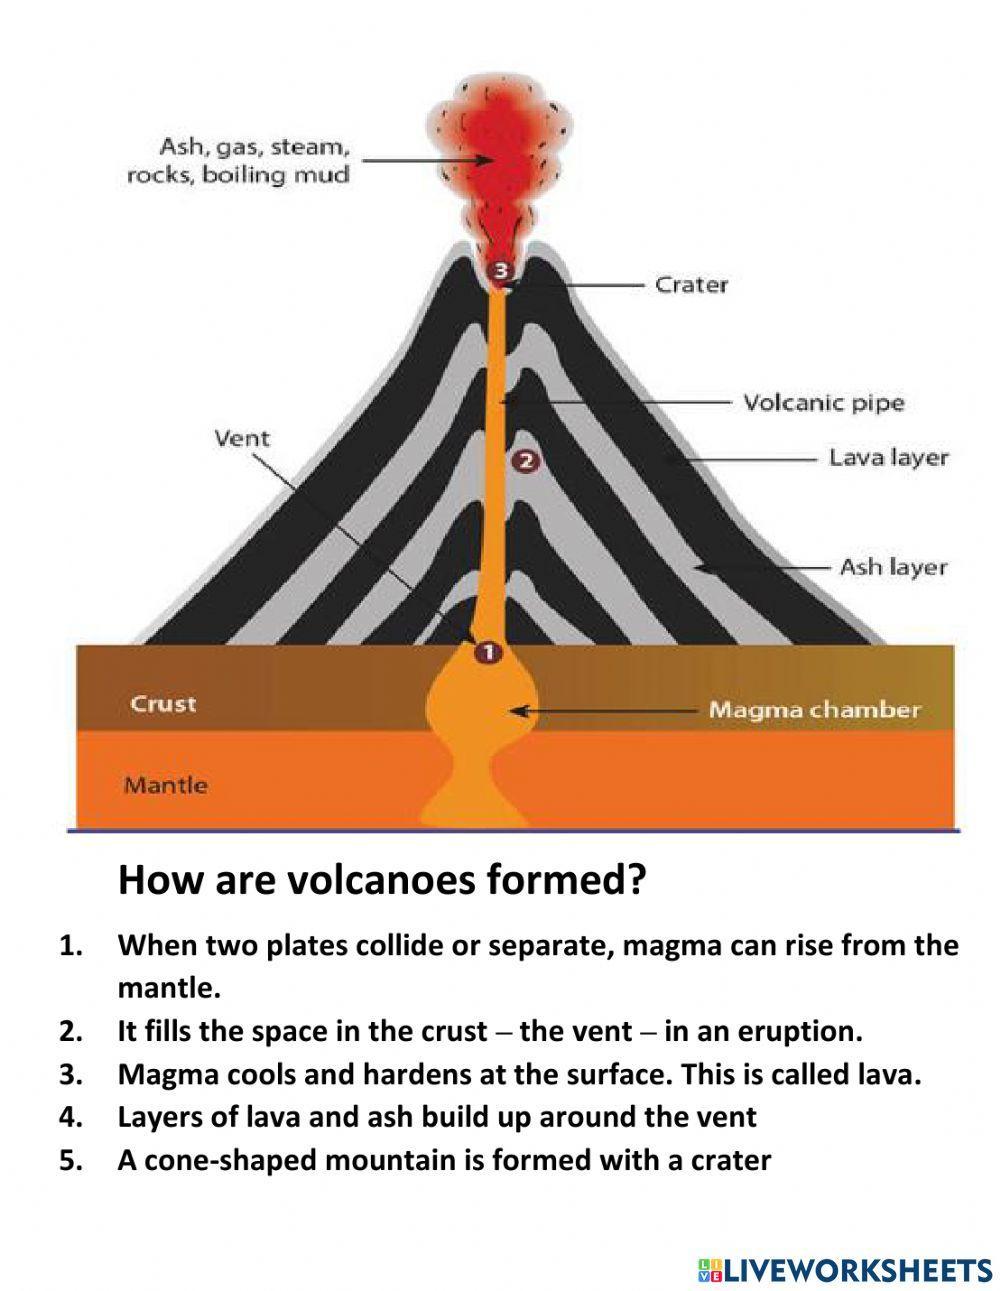 Volcanoes